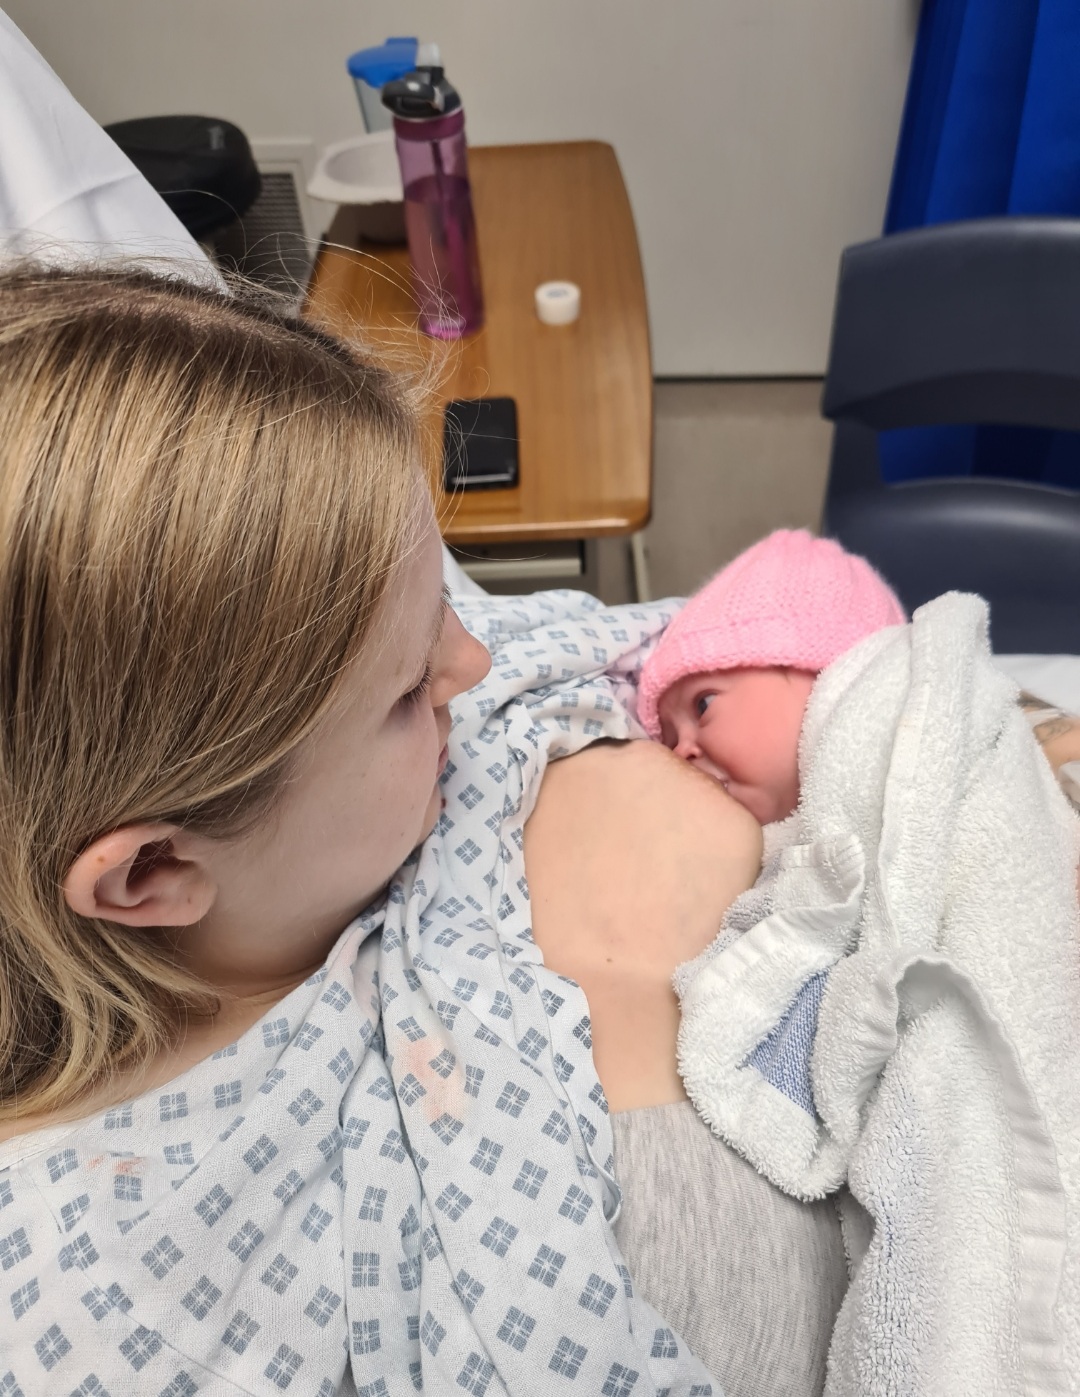 Joanna breastfeeding her newborn daughter in hospital